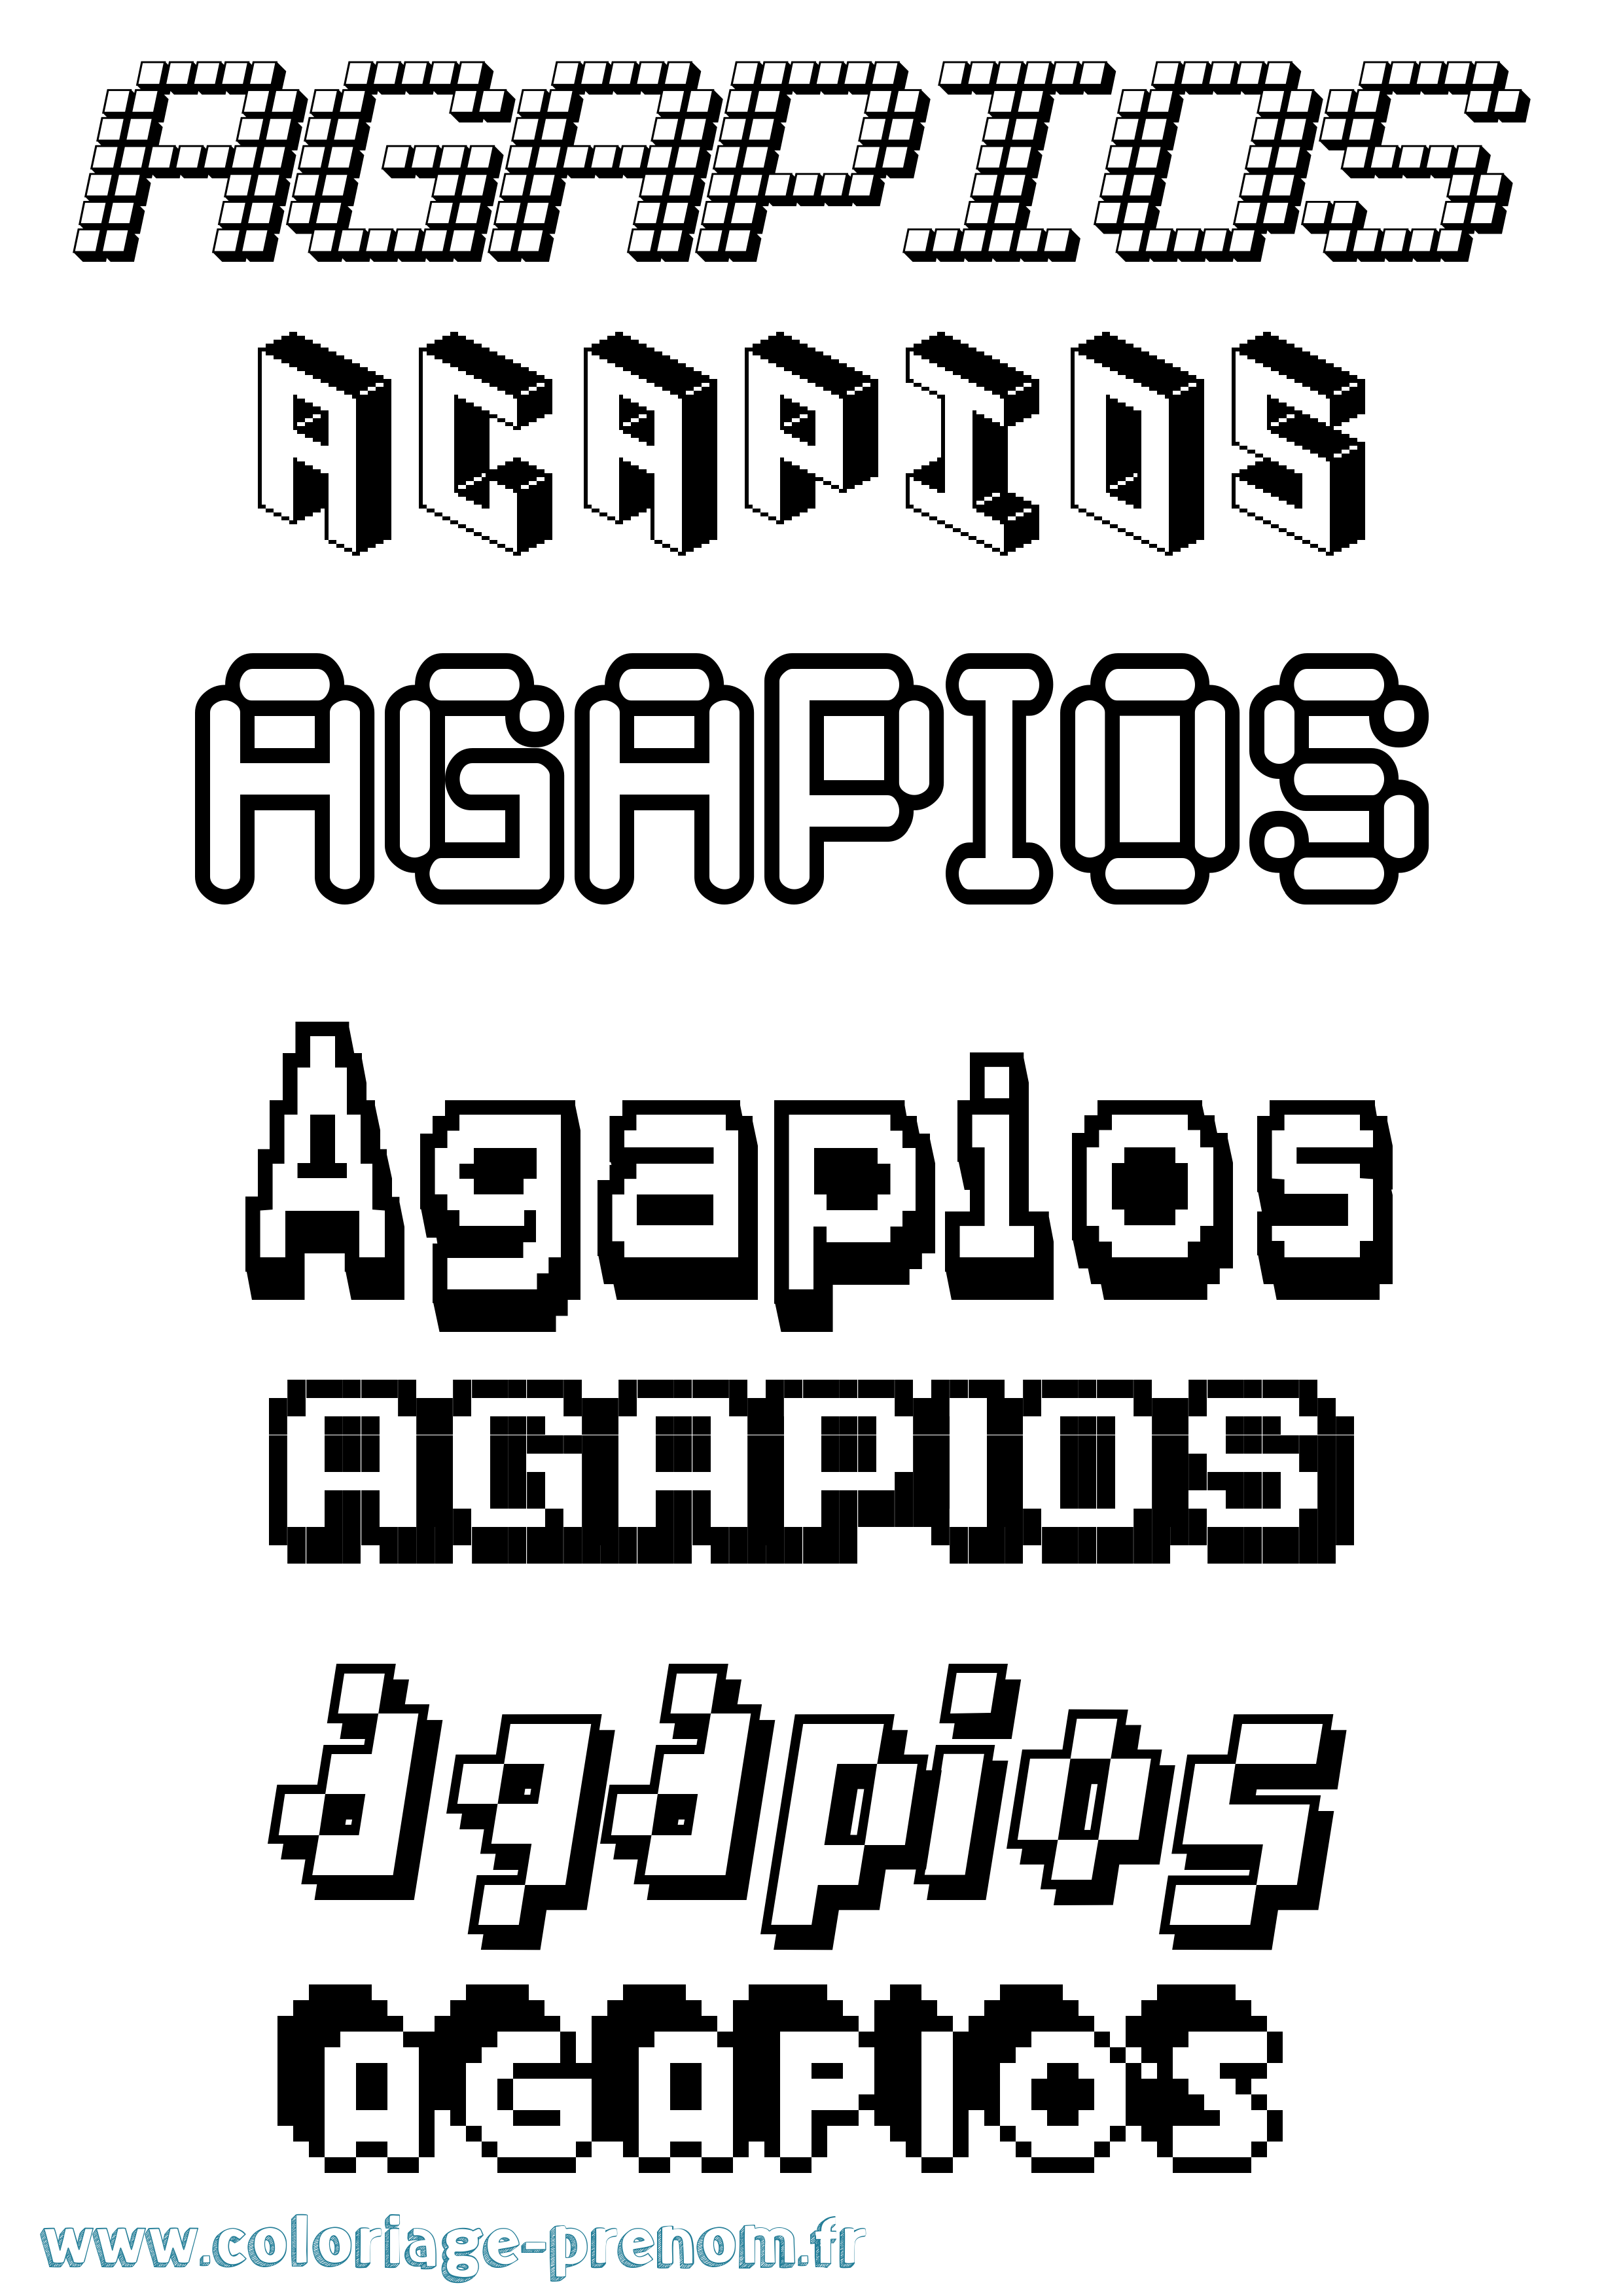 Coloriage prénom Agapios Pixel